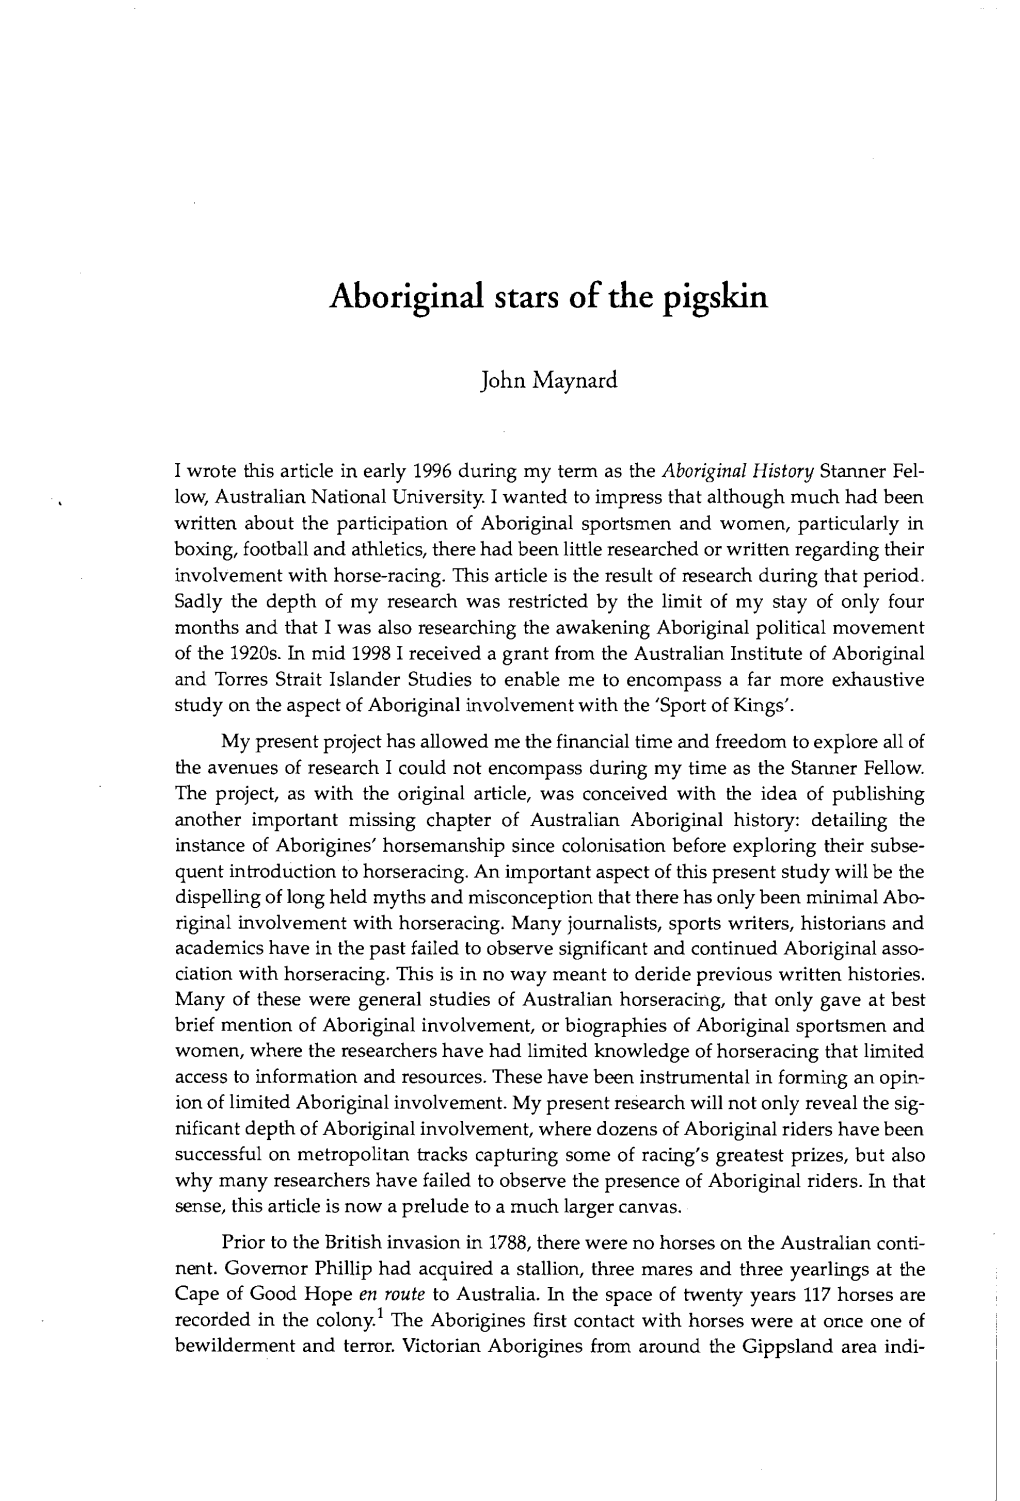 Aboriginal Stars of the Pigskin